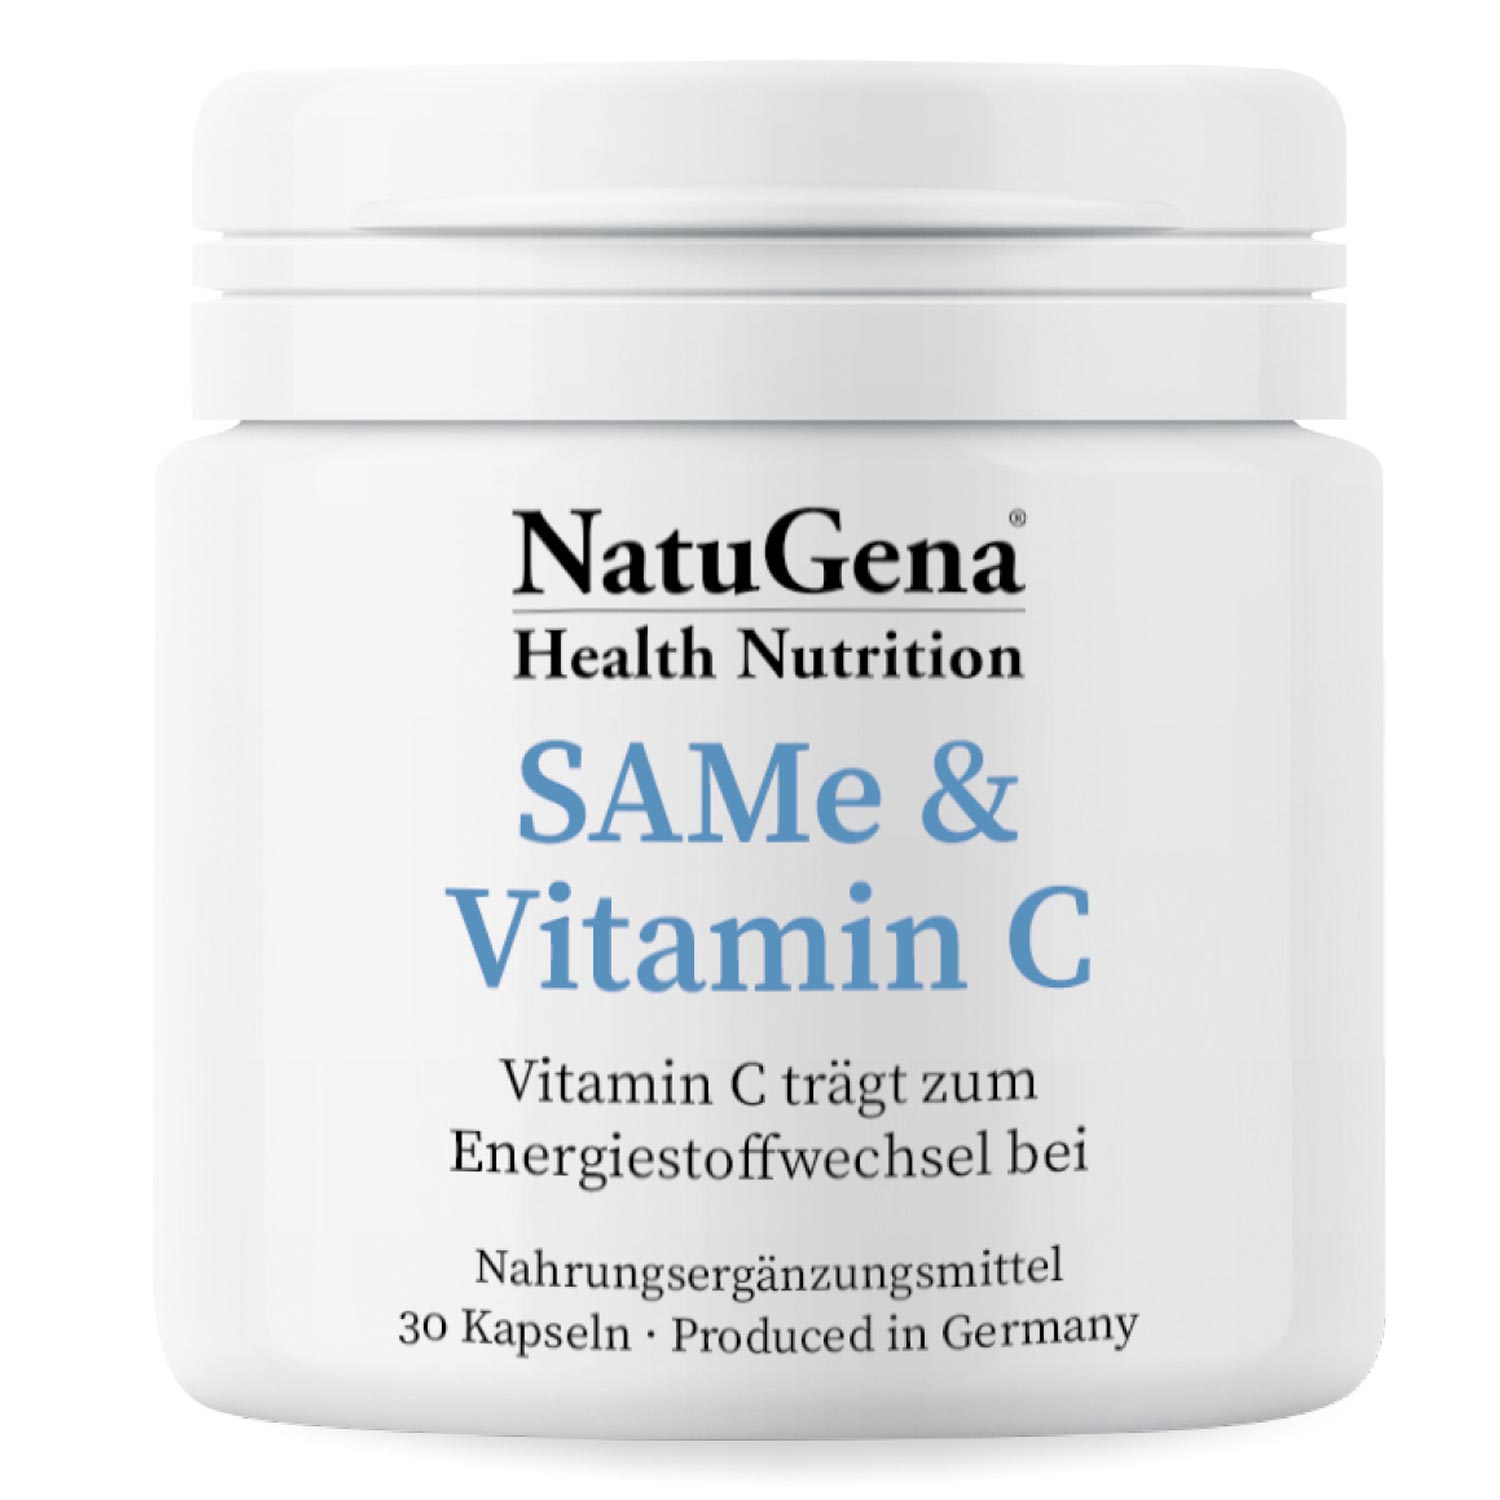 SAMe & Vitamin C von NatuGena - 30 Kapseln